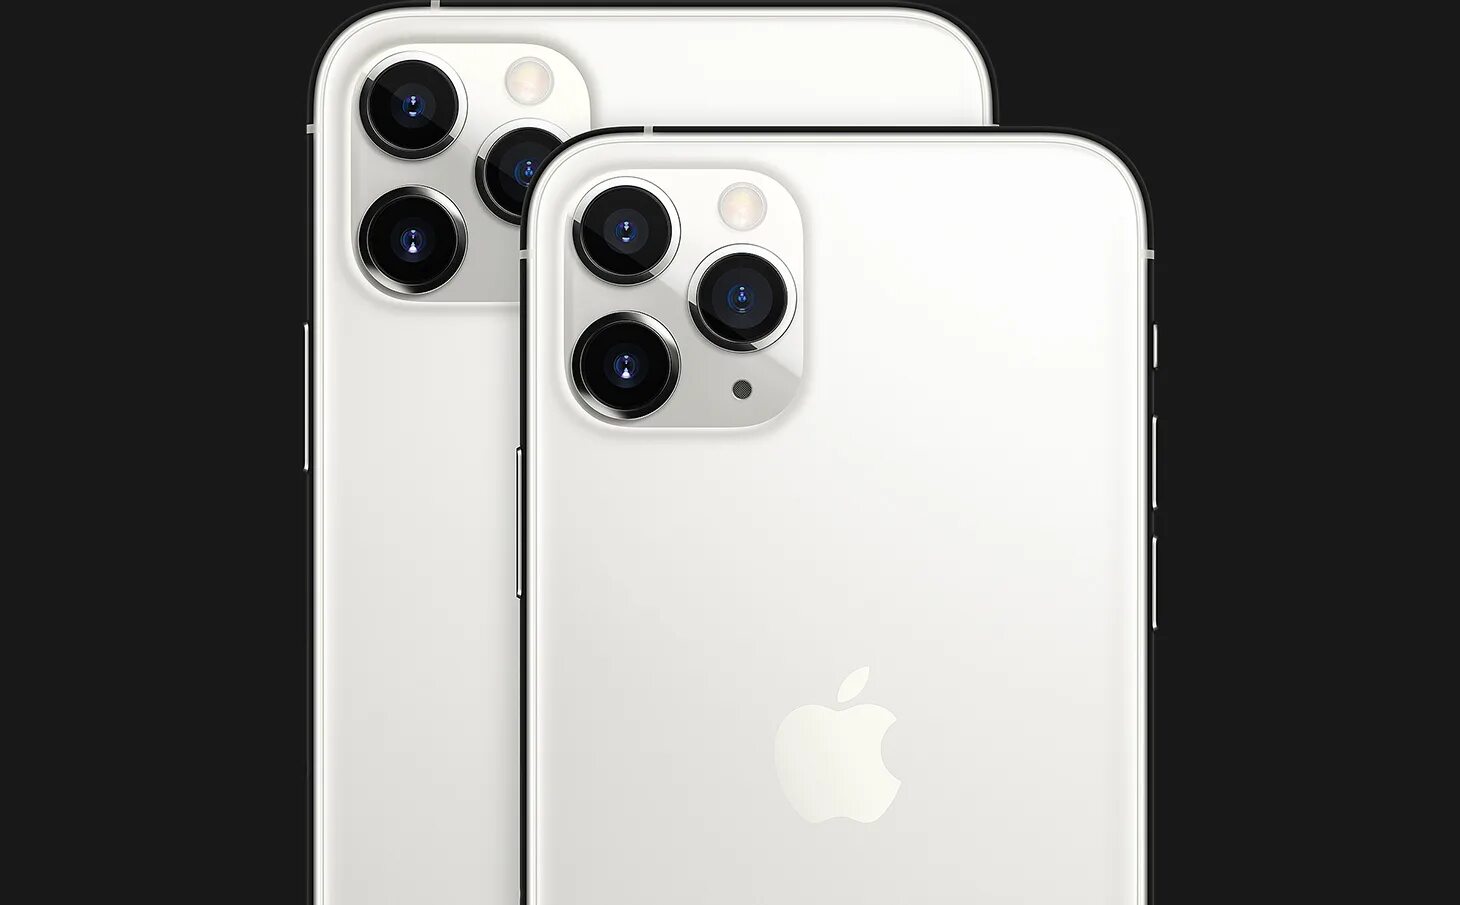 Айфон 11 хабаровск. Iphone 11 Pro Max Silver. Айфон 12 Промакс белый. Айфон 11 Промакс белый. Айфон 13 Промакс белый.